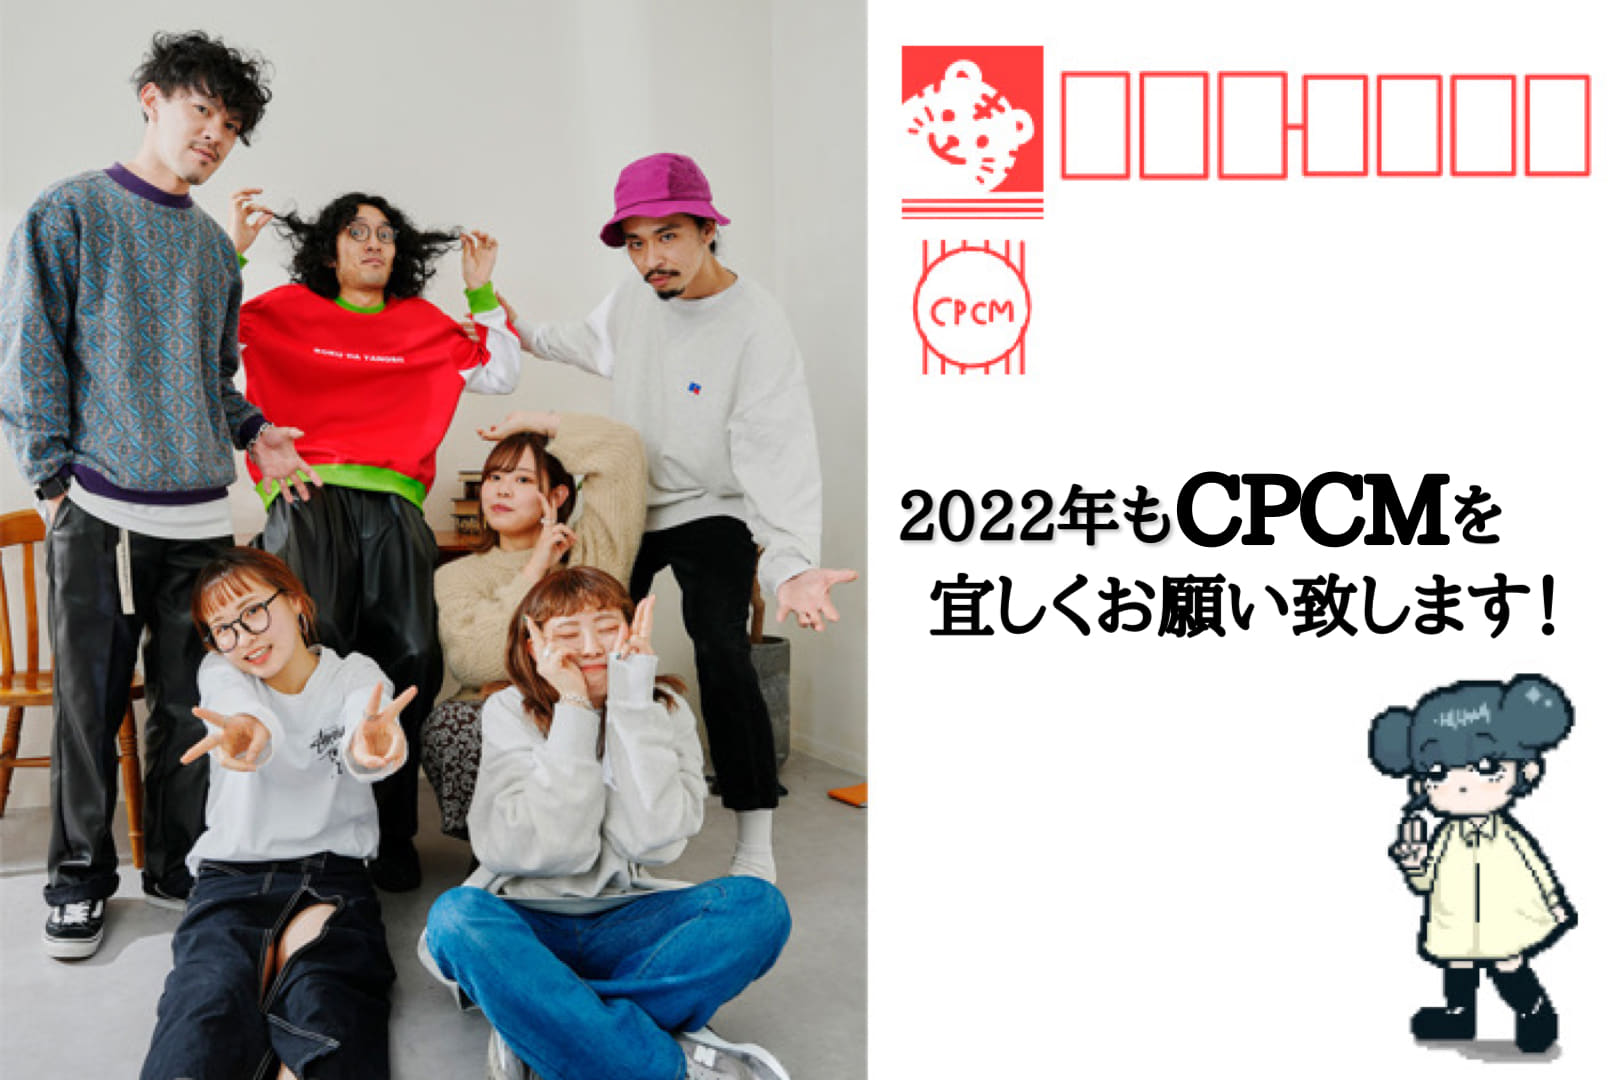 CPCM 2021-22ご挨拶 イチオシアイテムをご紹介!!